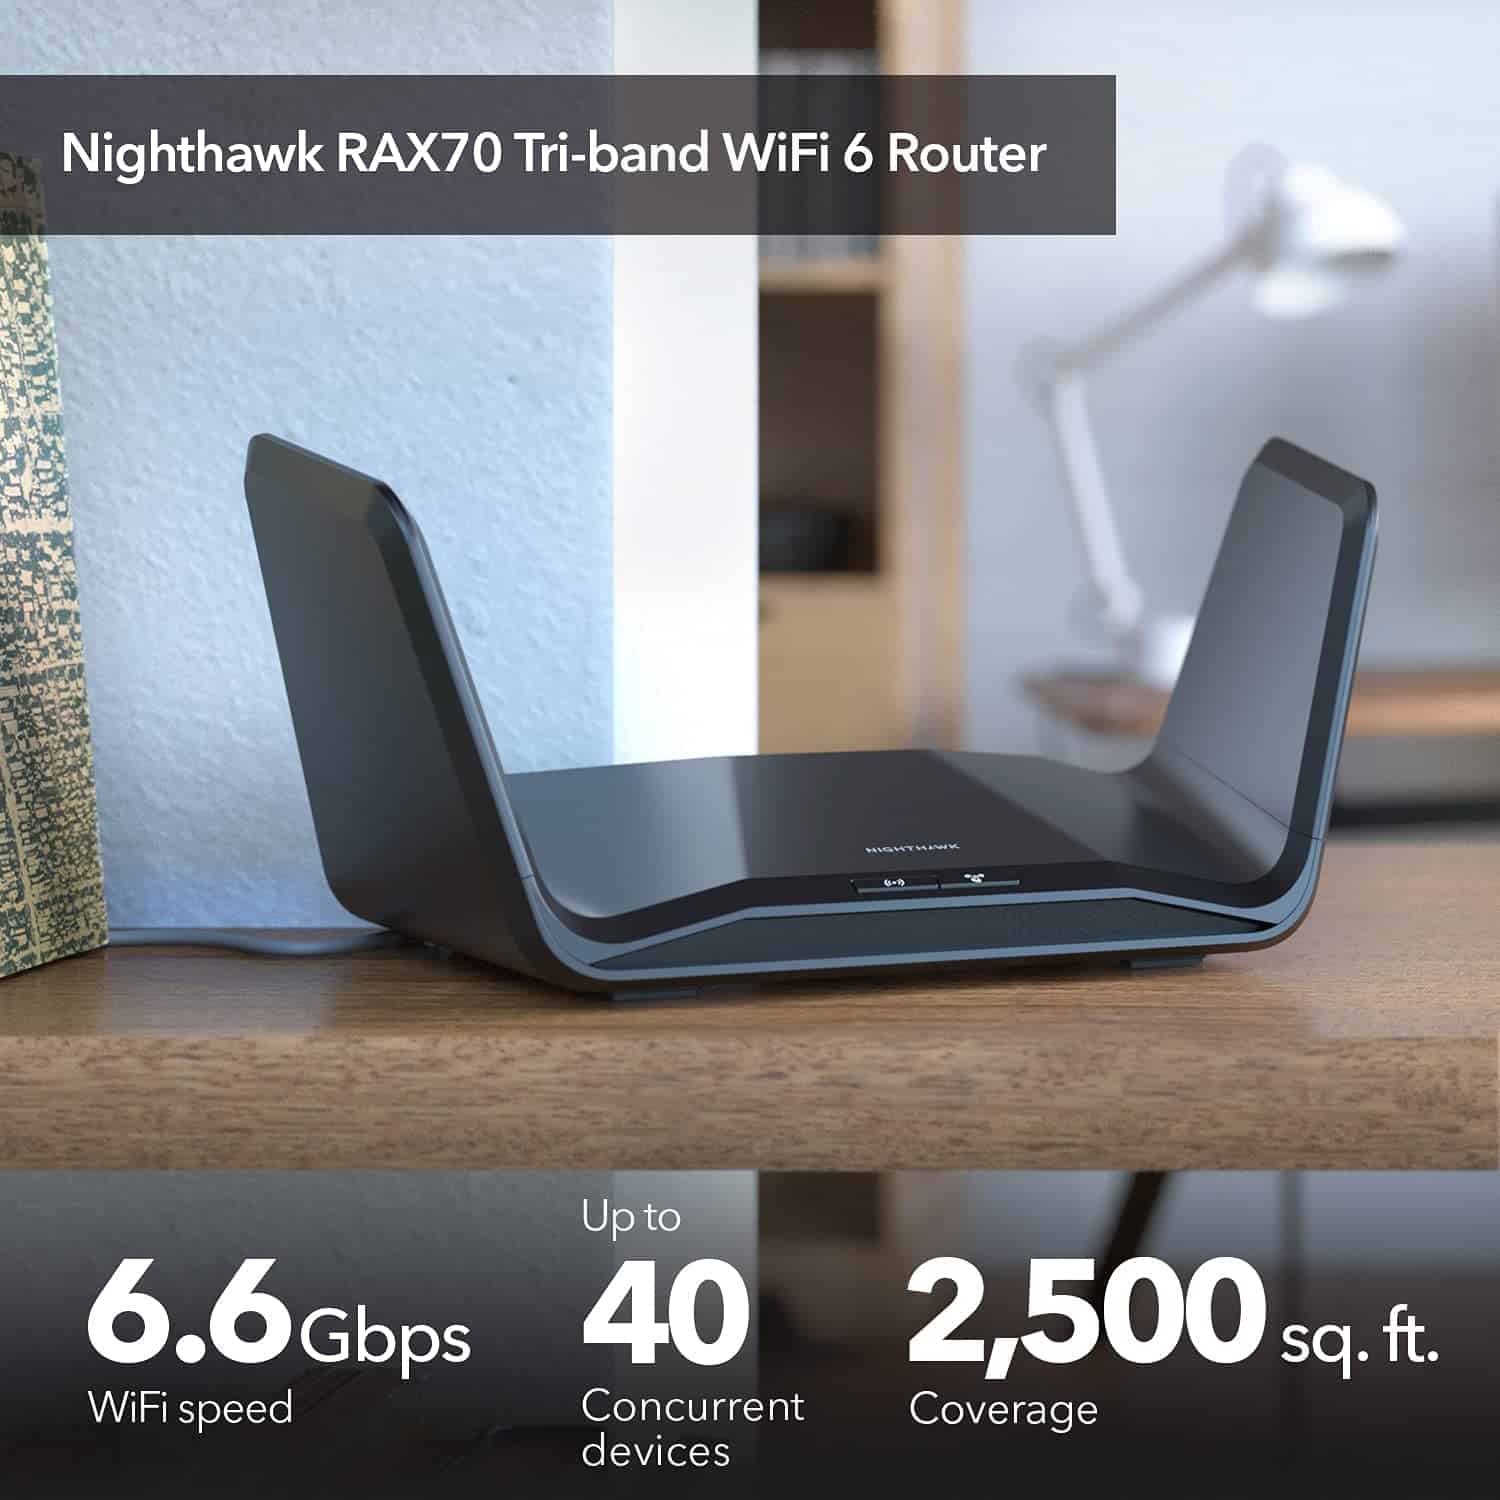 Netgear Nighthawk RAX70 Wifi Coverage and Device Capacity